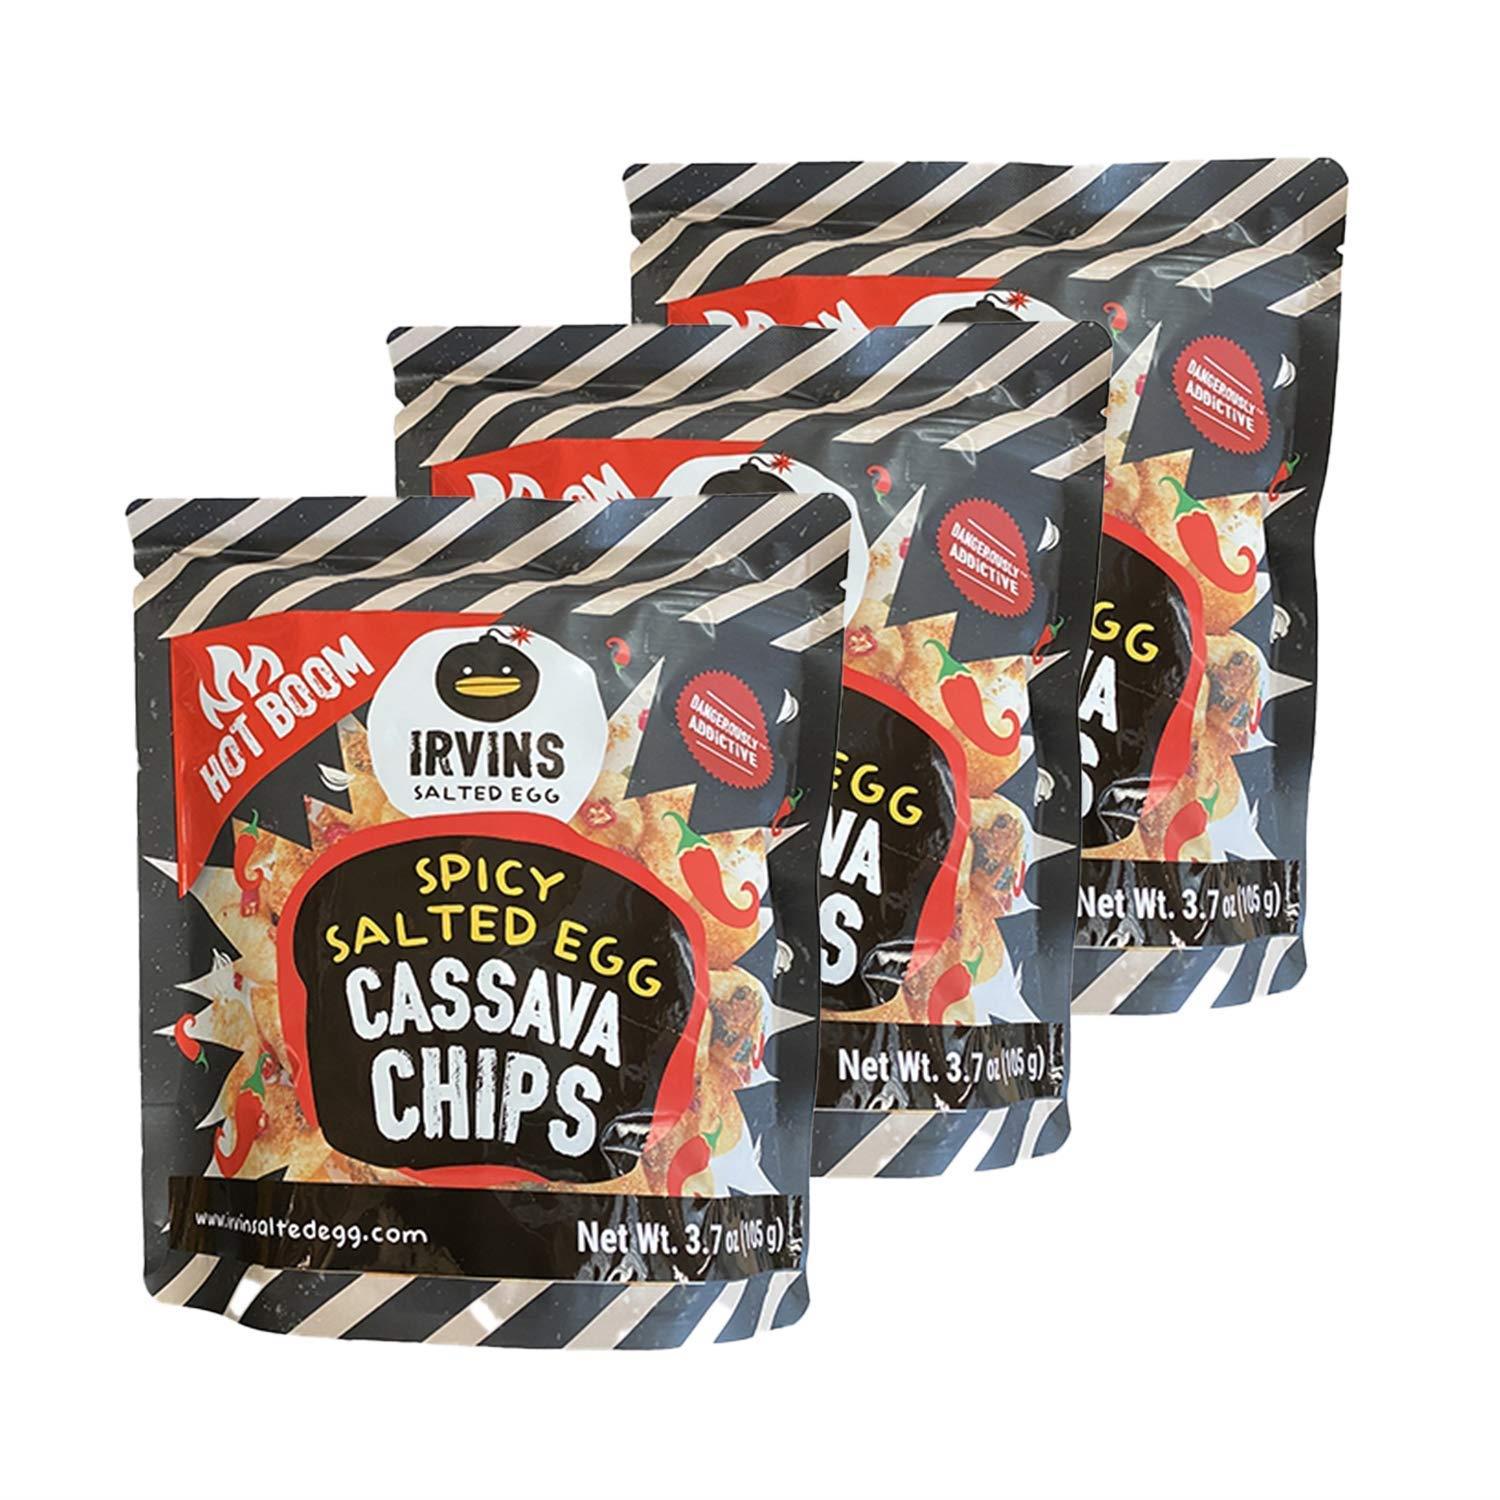 IRVINS Dangerously Addictive Salted Egg Chips Crisps Snacks (Hot Bomb Salted Egg Cassava, 105g -3 Bag)